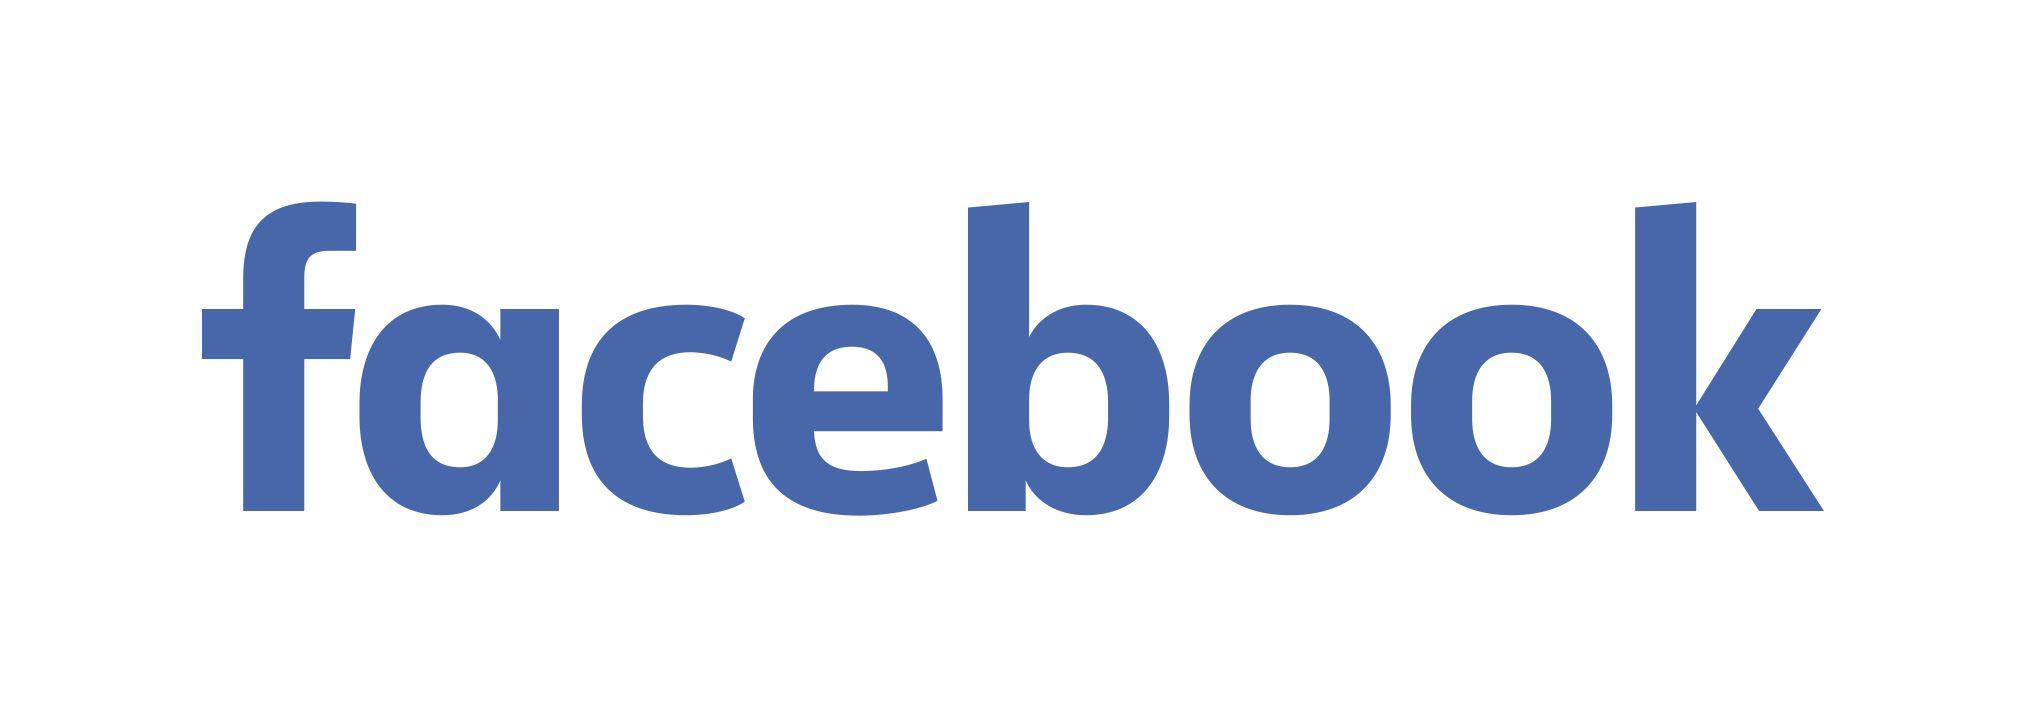 New Facebook Logo - Facebook Logo, FB symbol meaning, History and Evolution